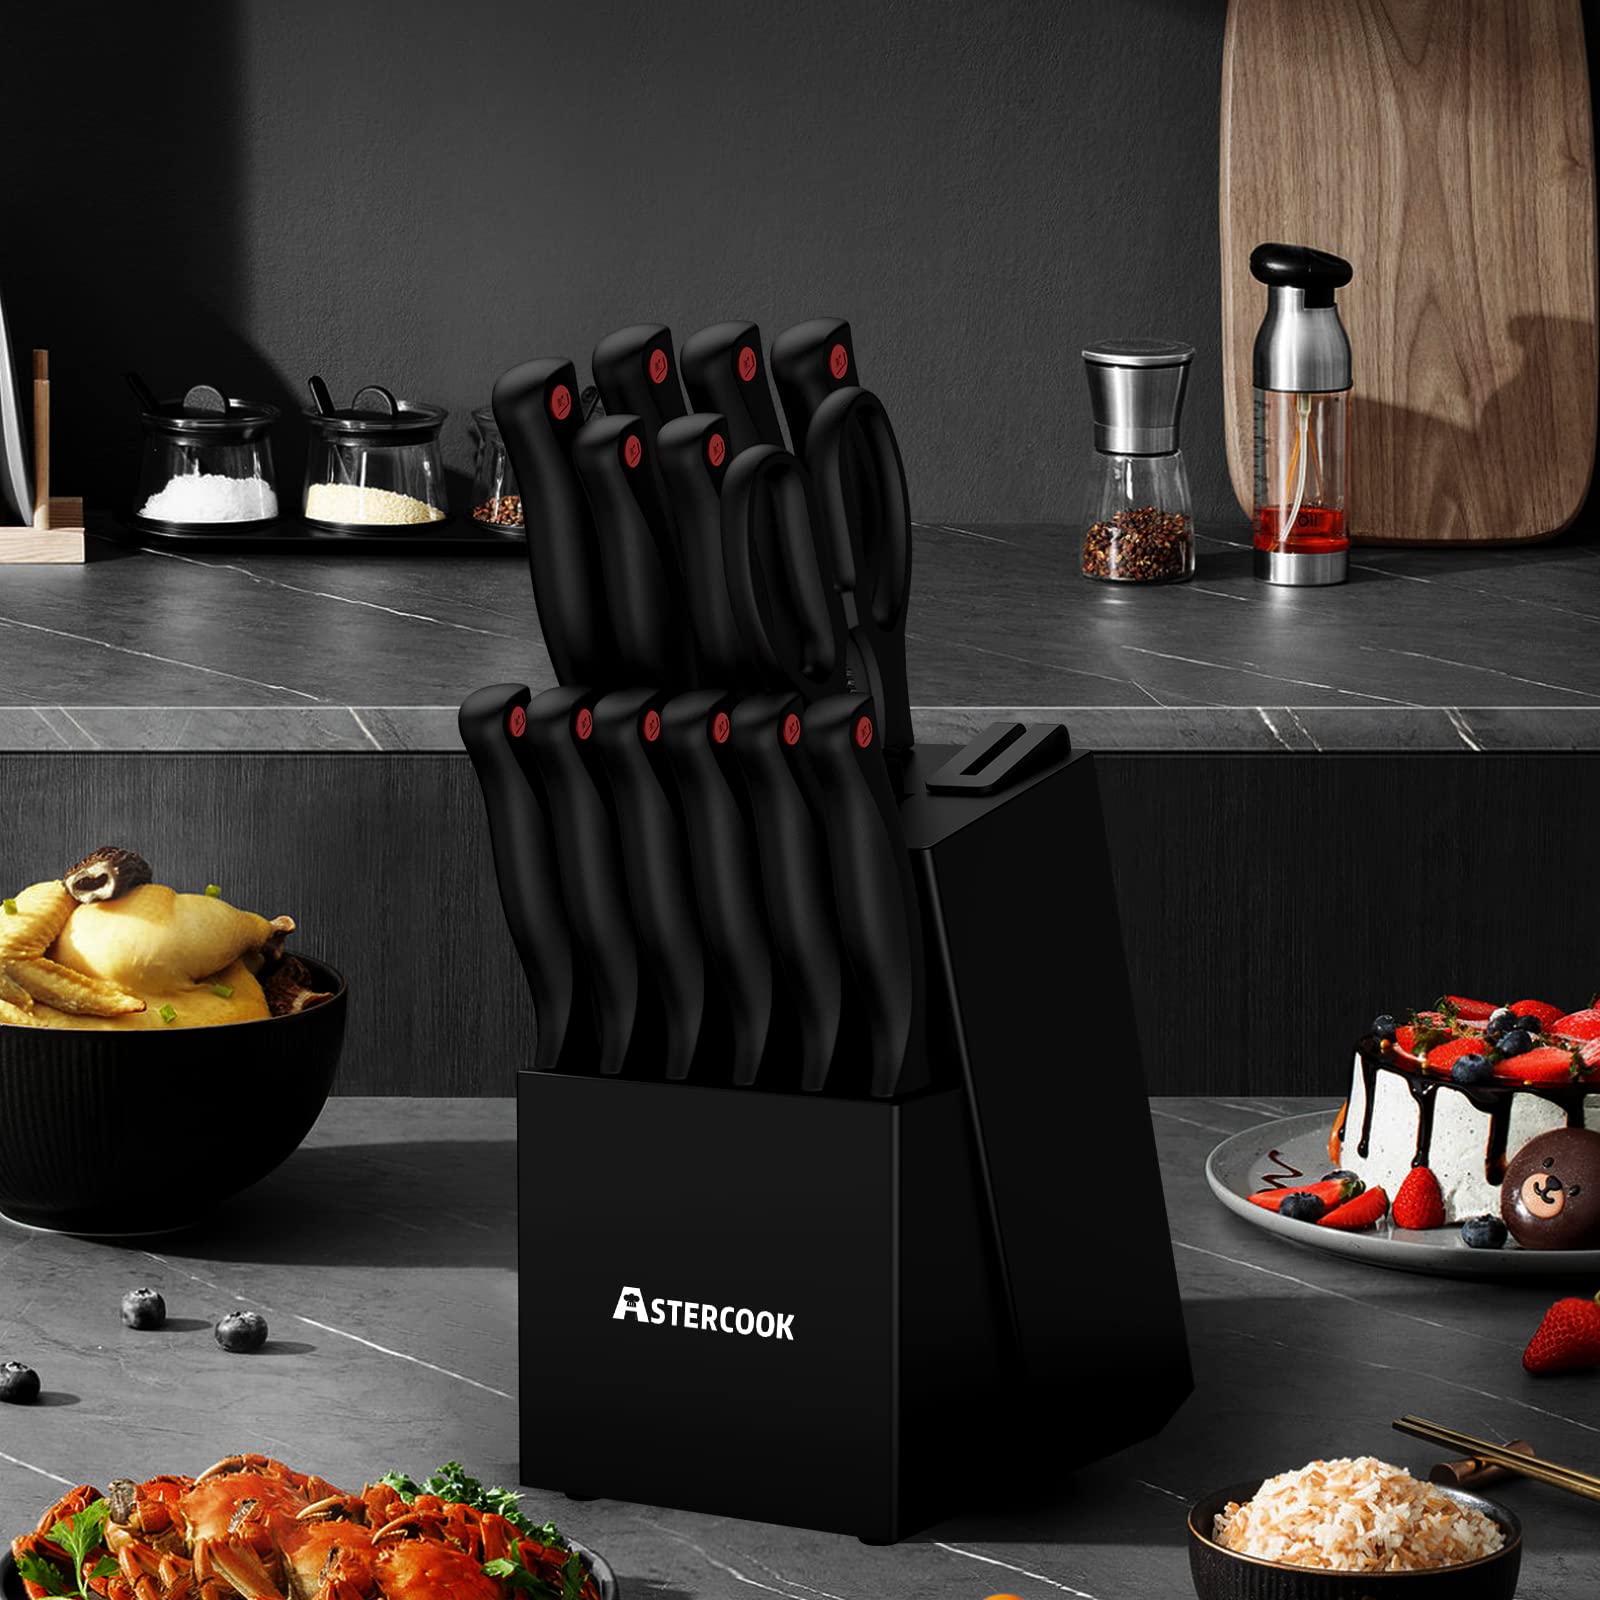 Astercook 15-Piece Knife Set with Built-in Sharpener, Dishwasher Safe High Carbon Stainless Steel Knives and Steak Knives, Black